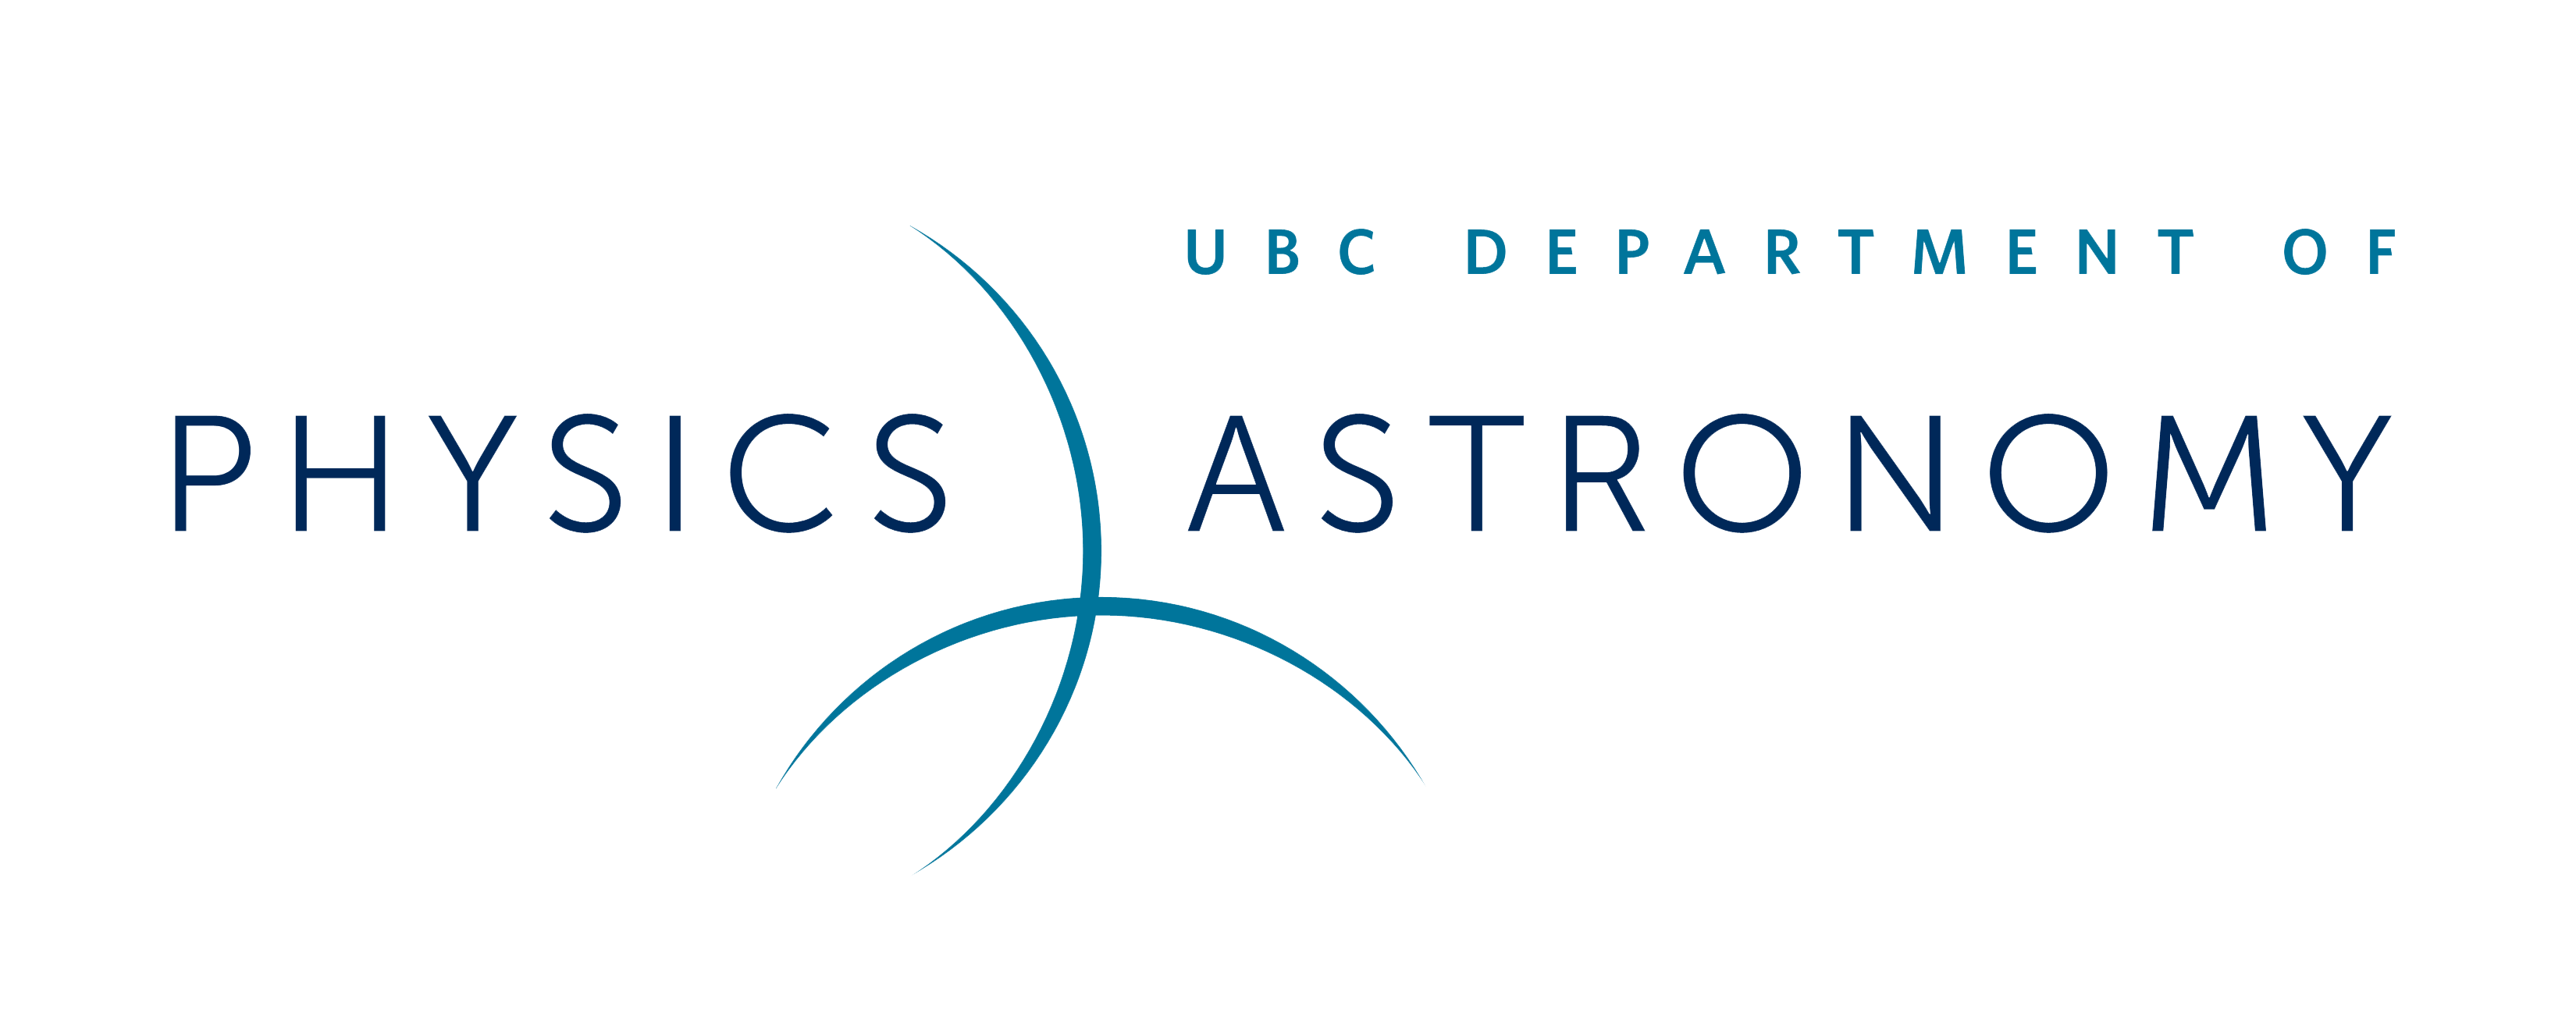 UBC Physics & Astronomy